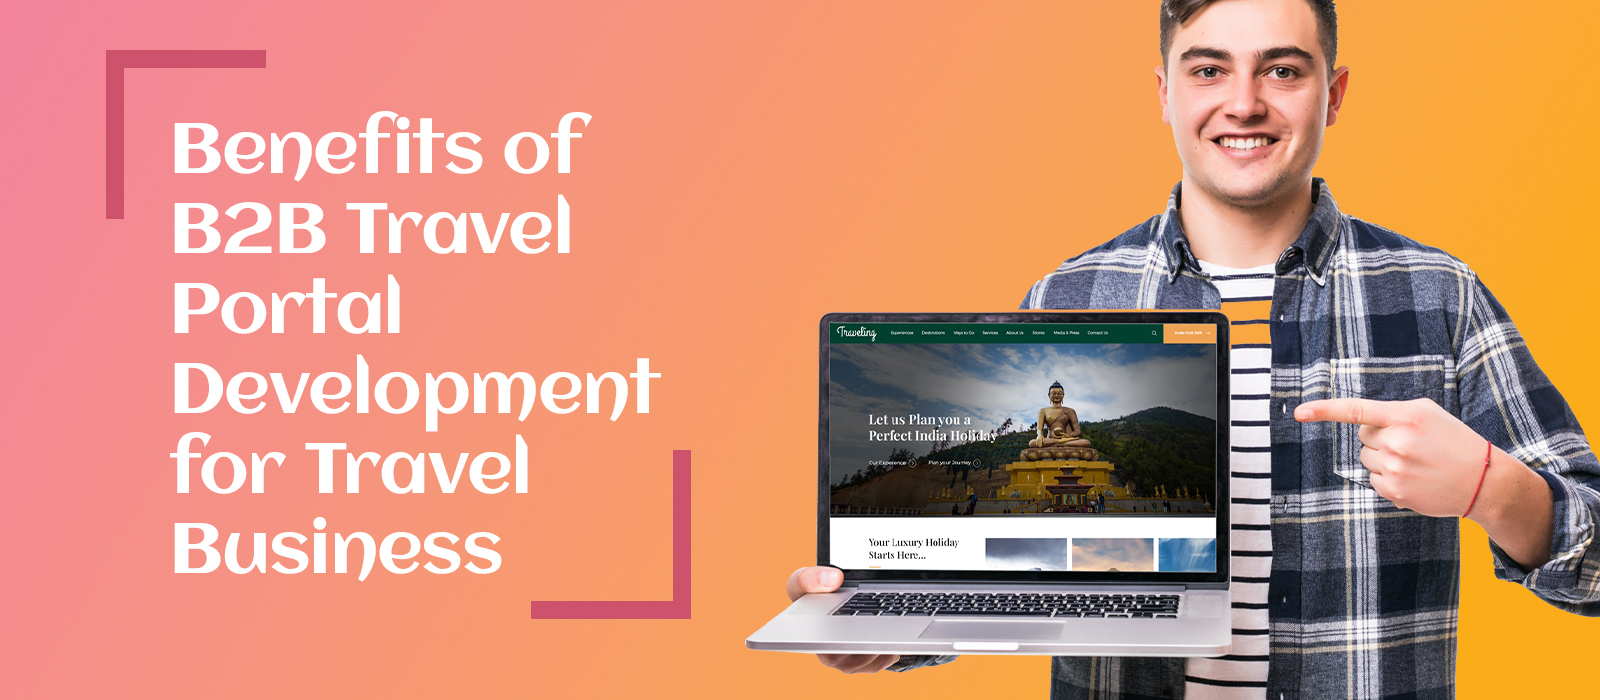 Benefits of B2B Travel Portal Development for Travel Business